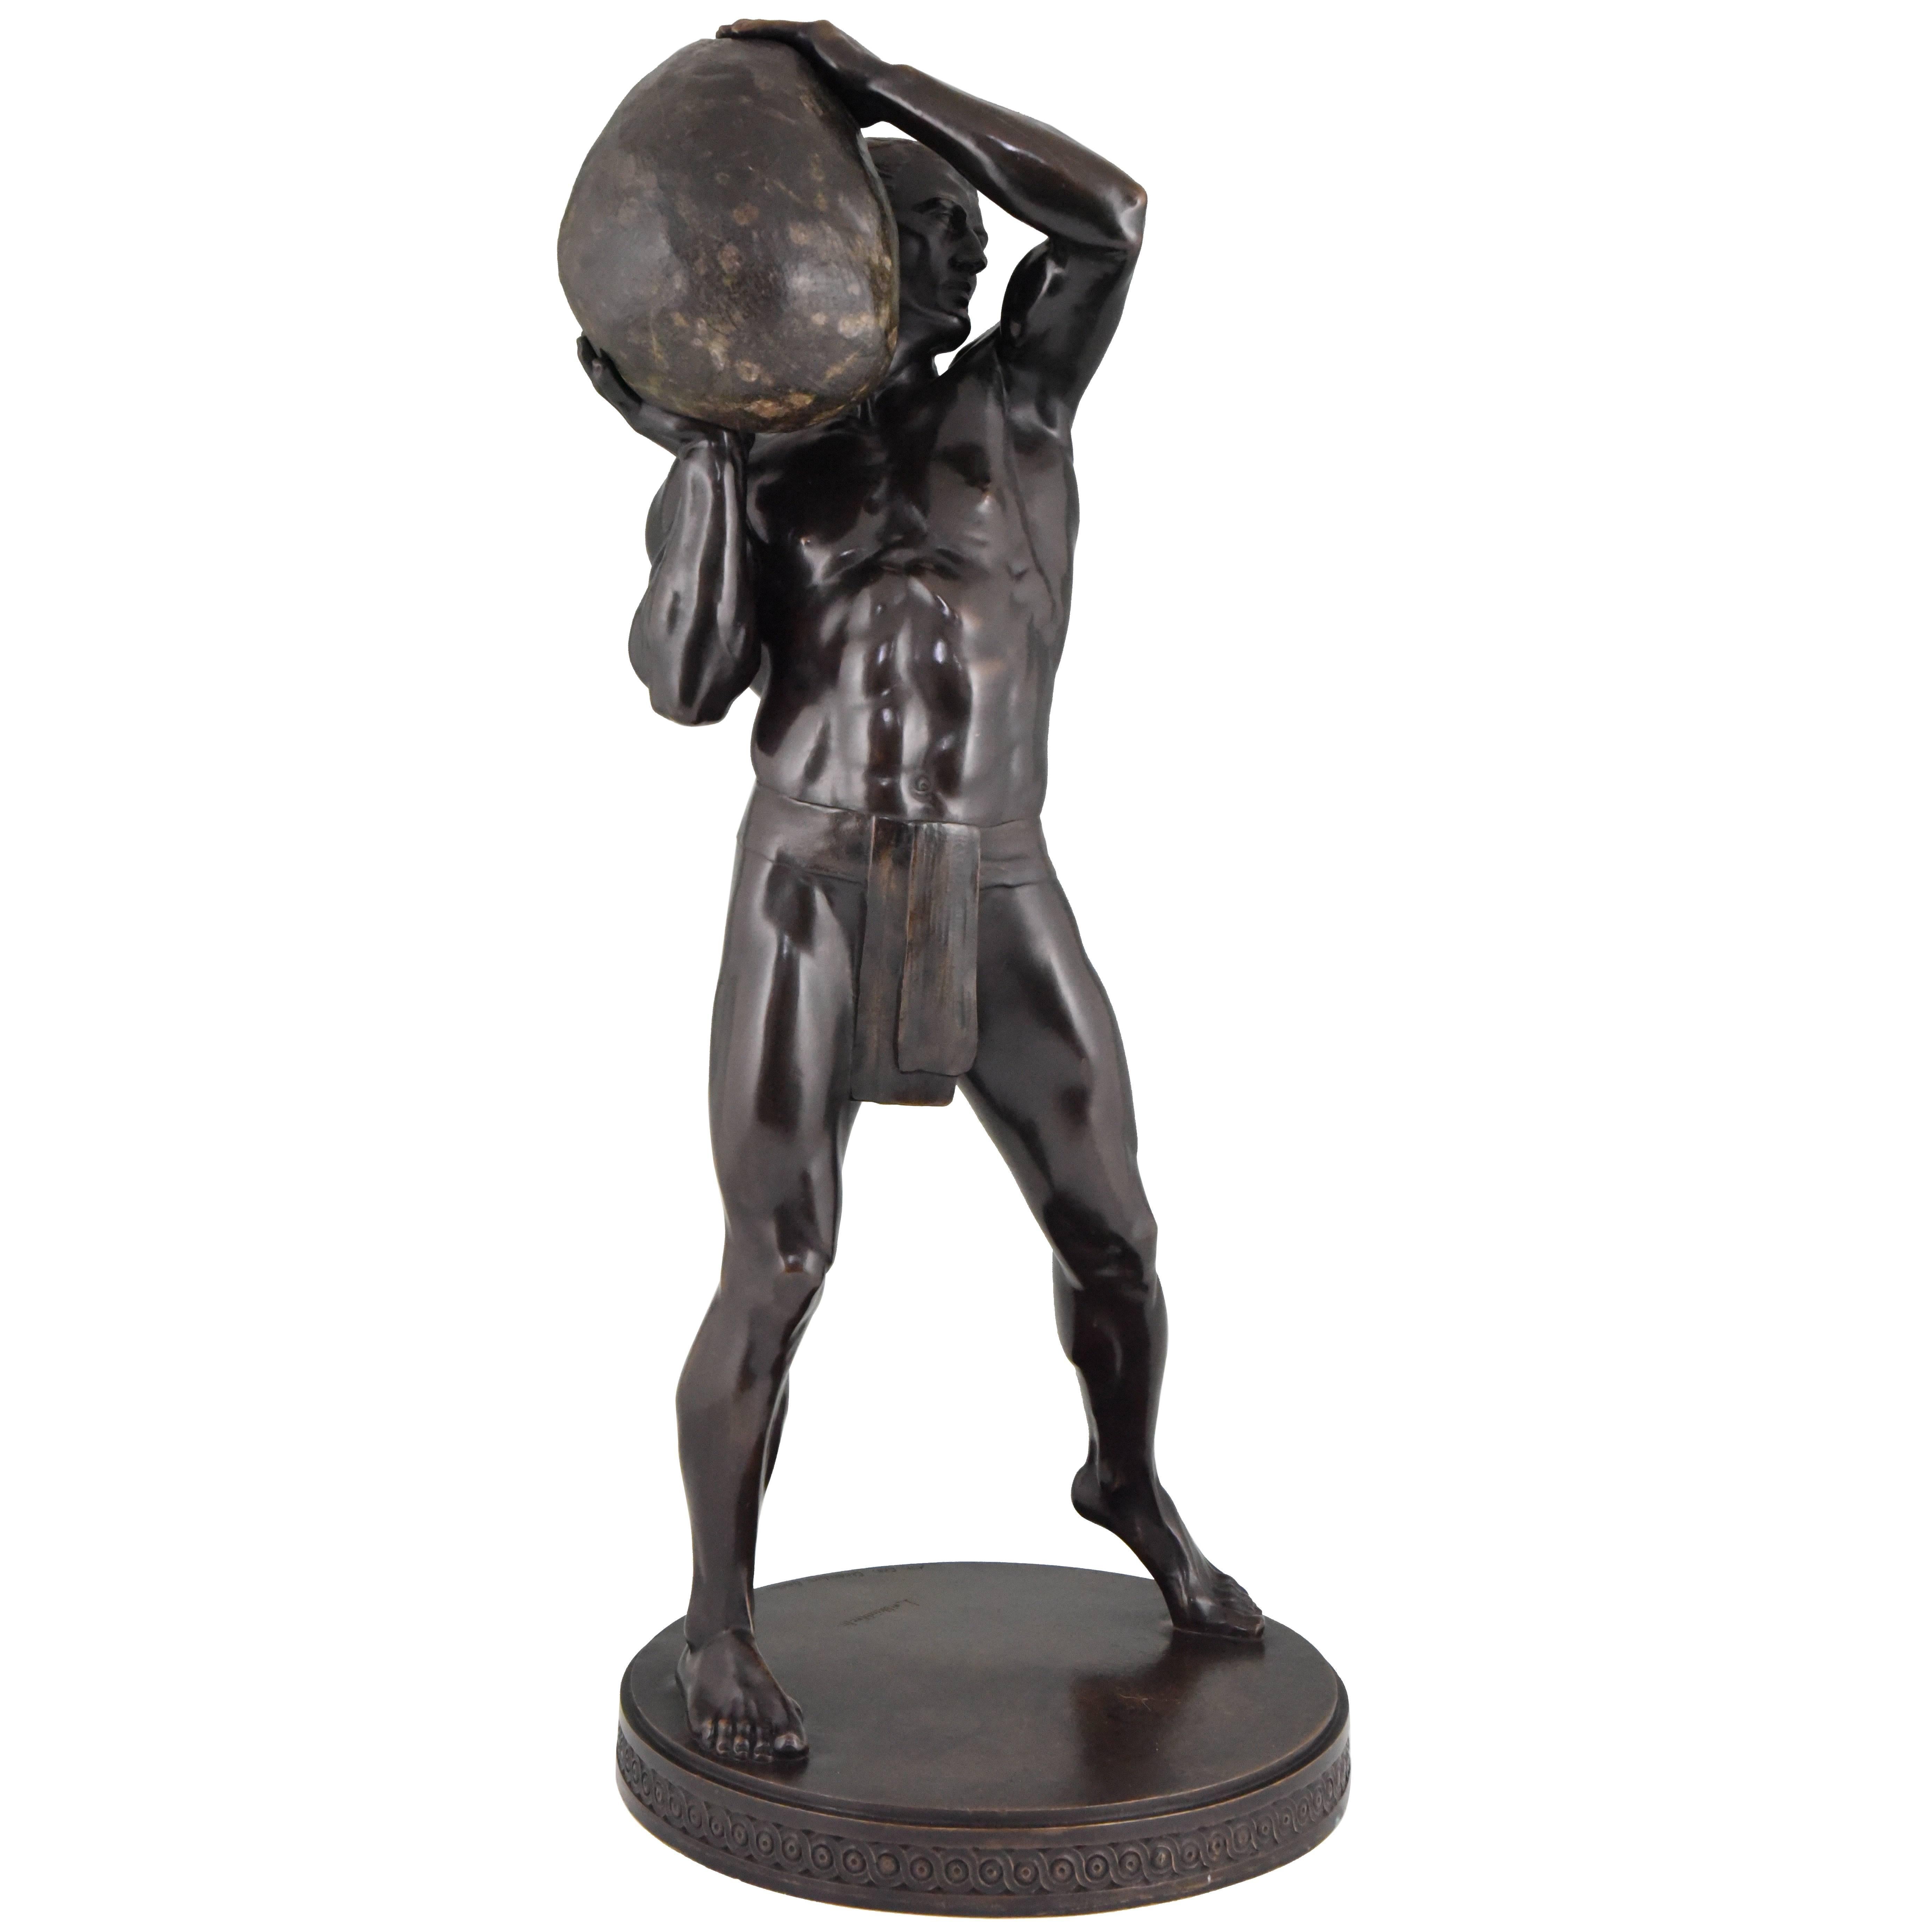 Antique Bronze Sculpture Male Nude Athlete by Paul Leibküchler, 1910 H. 26 inch